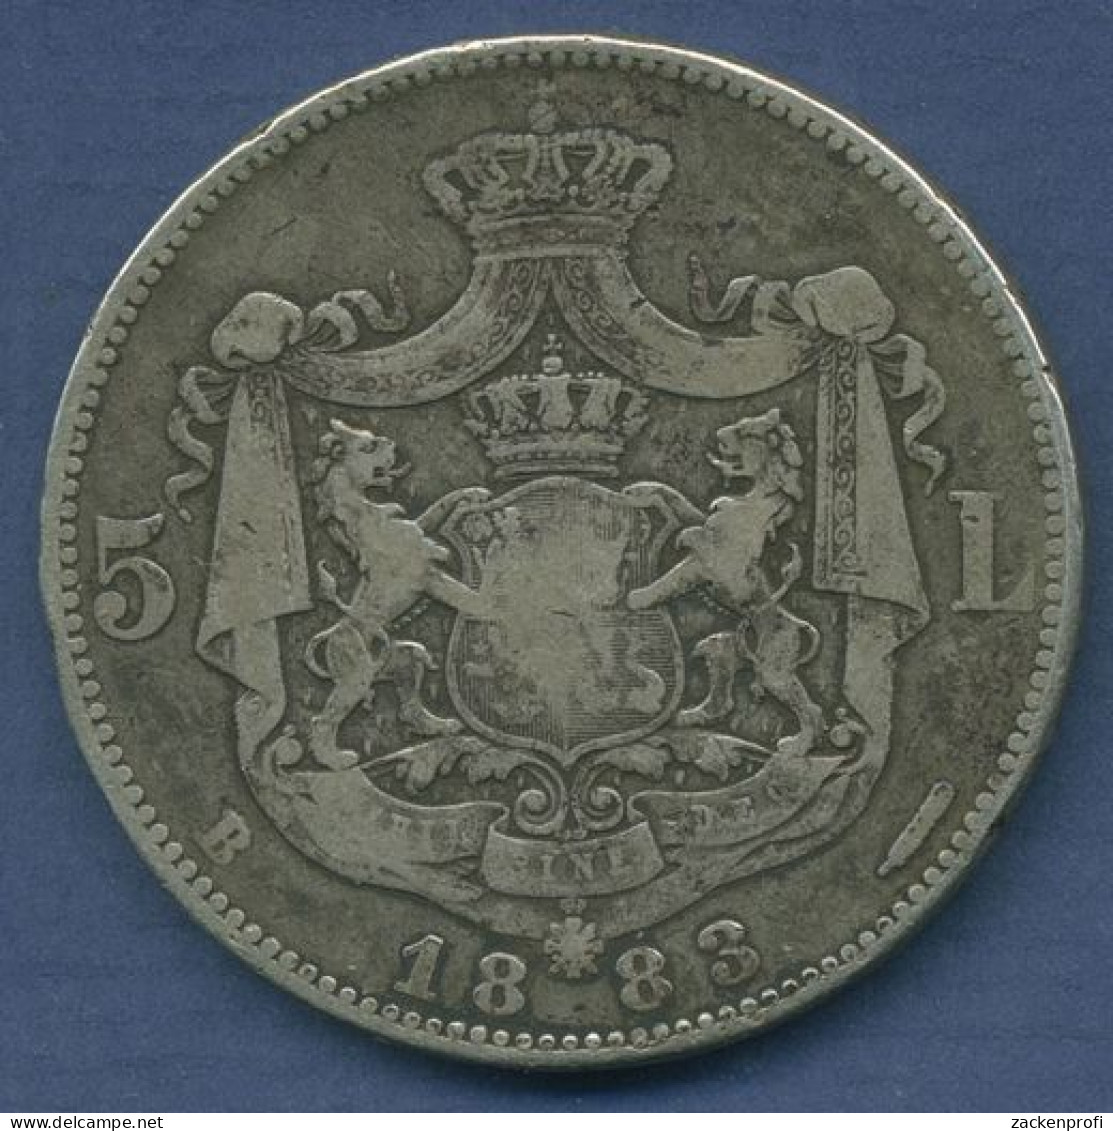 Rumänien 5 Lei 1883 B, Carol I., KM 17.1 Schön - Sehr Schön (m3937) - Rumania